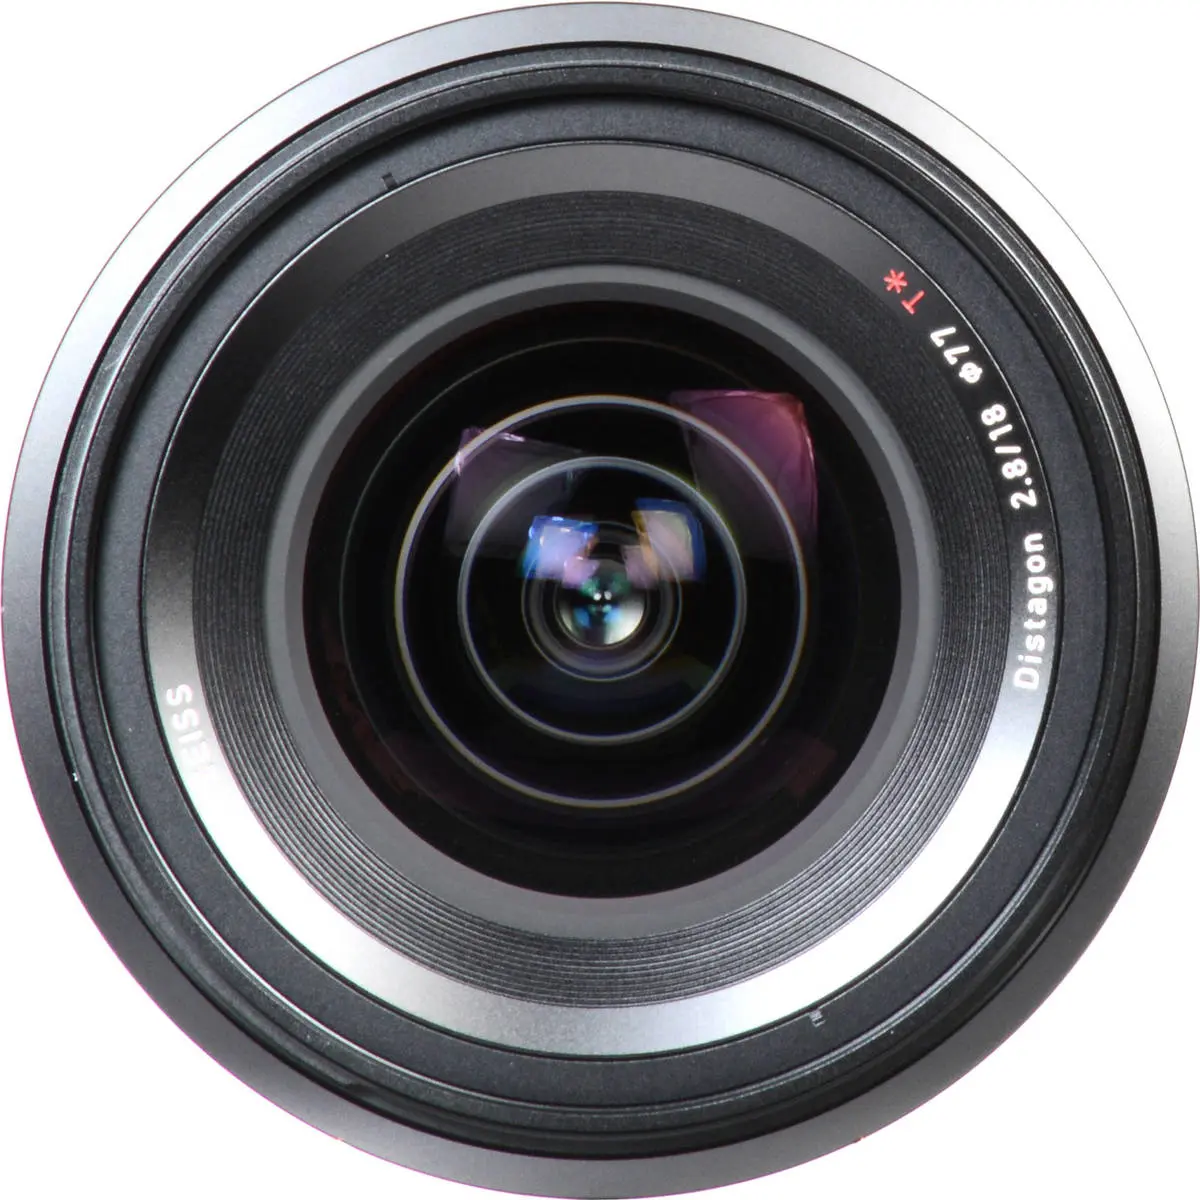 14. Carl Zeiss Milvus ZE 2.8/18mm (Canon) Lens